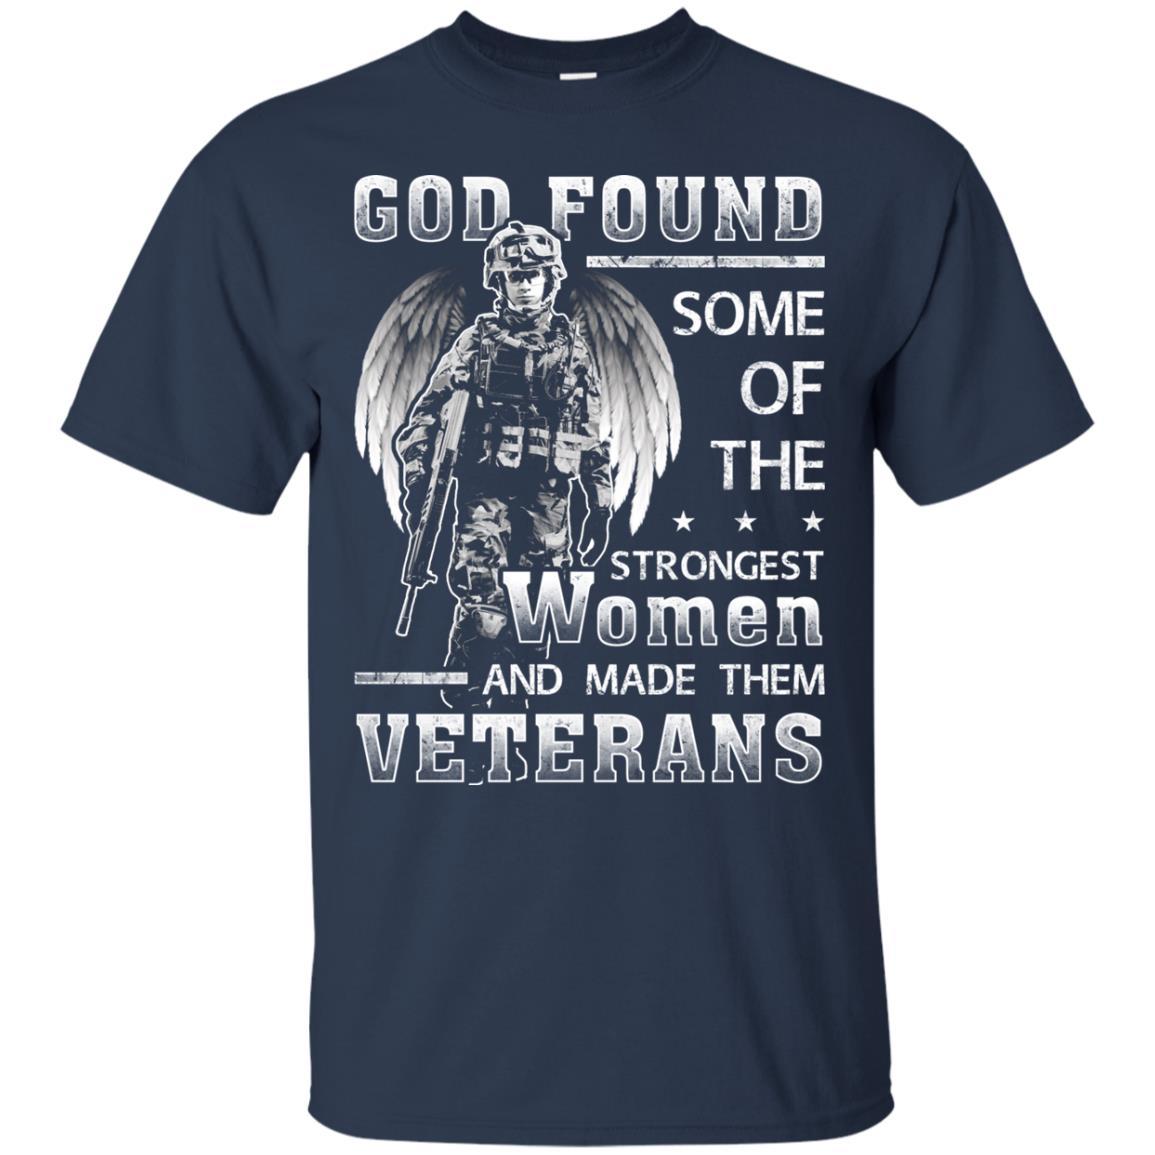 Military T-Shirt "Female Veterans God Found The Strongest Women And Made Them Veterans Women On" Front-TShirt-General-Veterans Nation